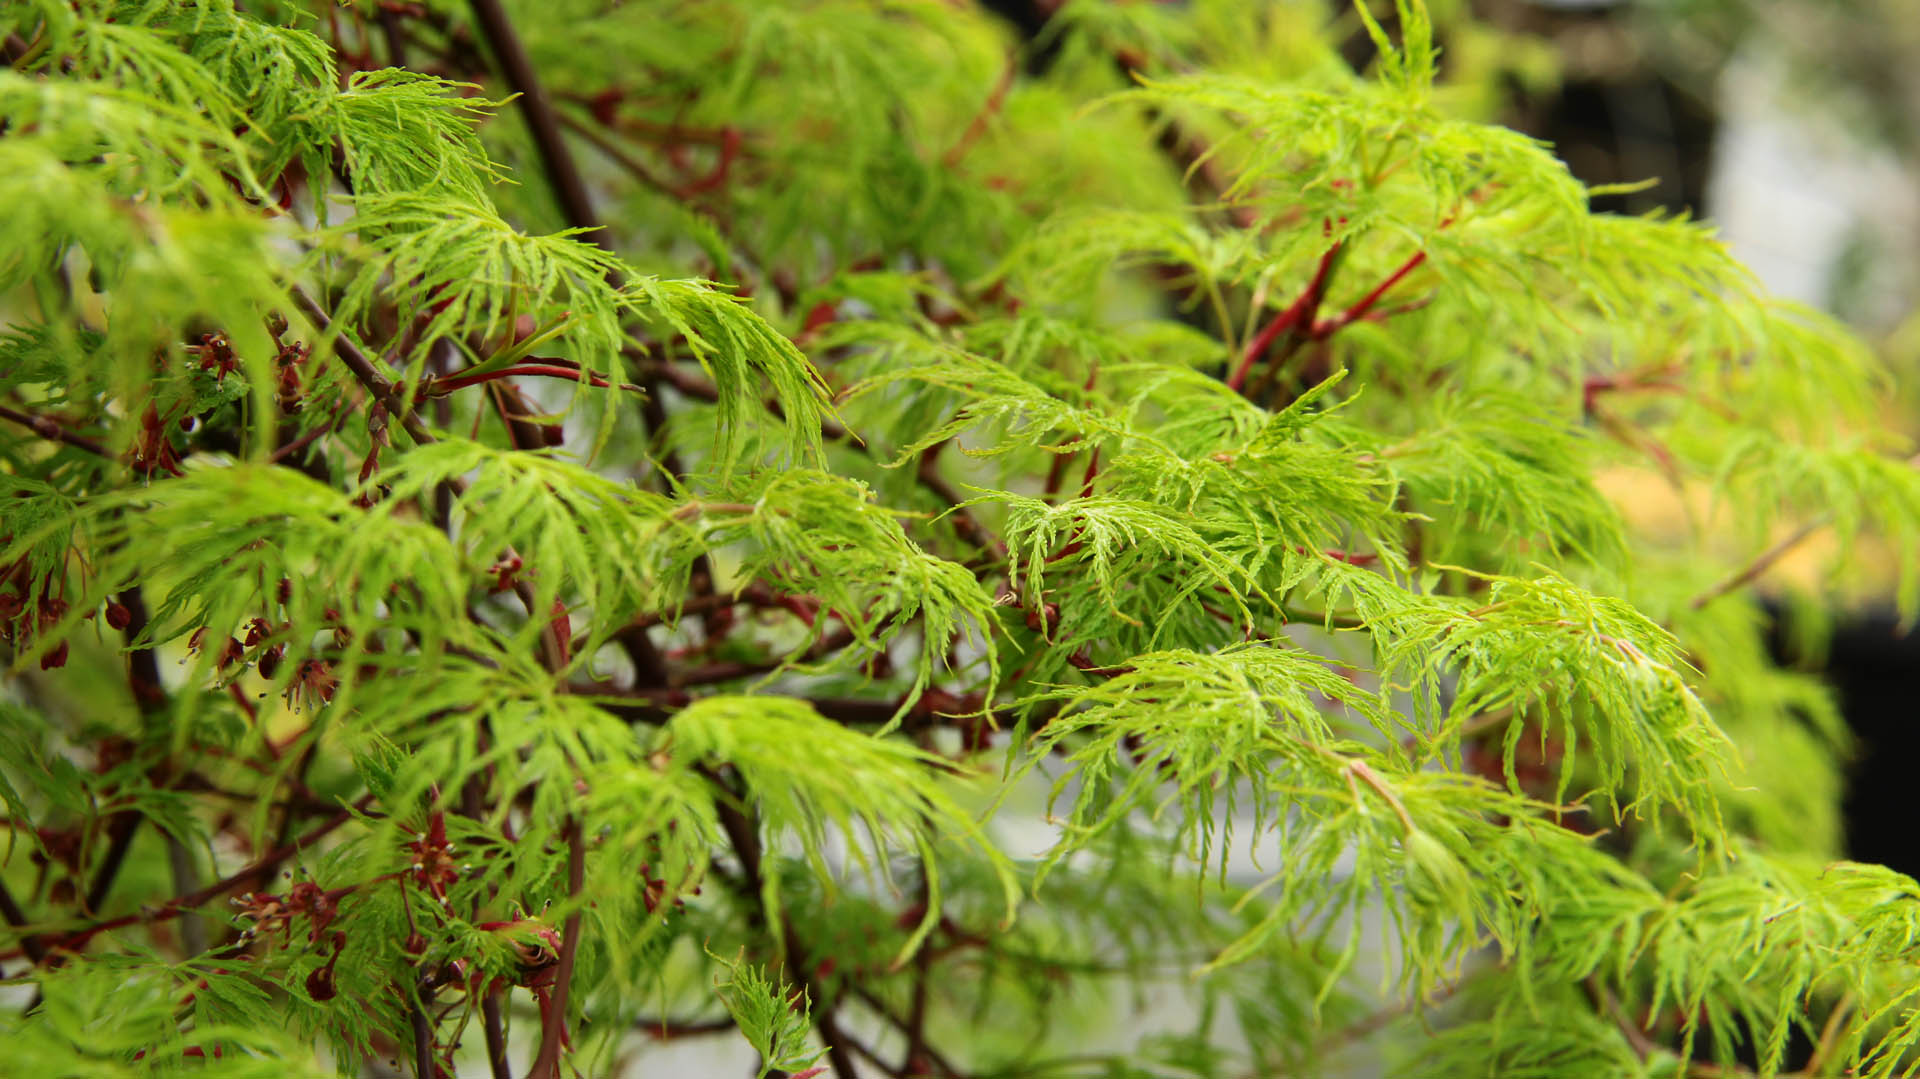 Acer palmatum ‘Emerald Lace’